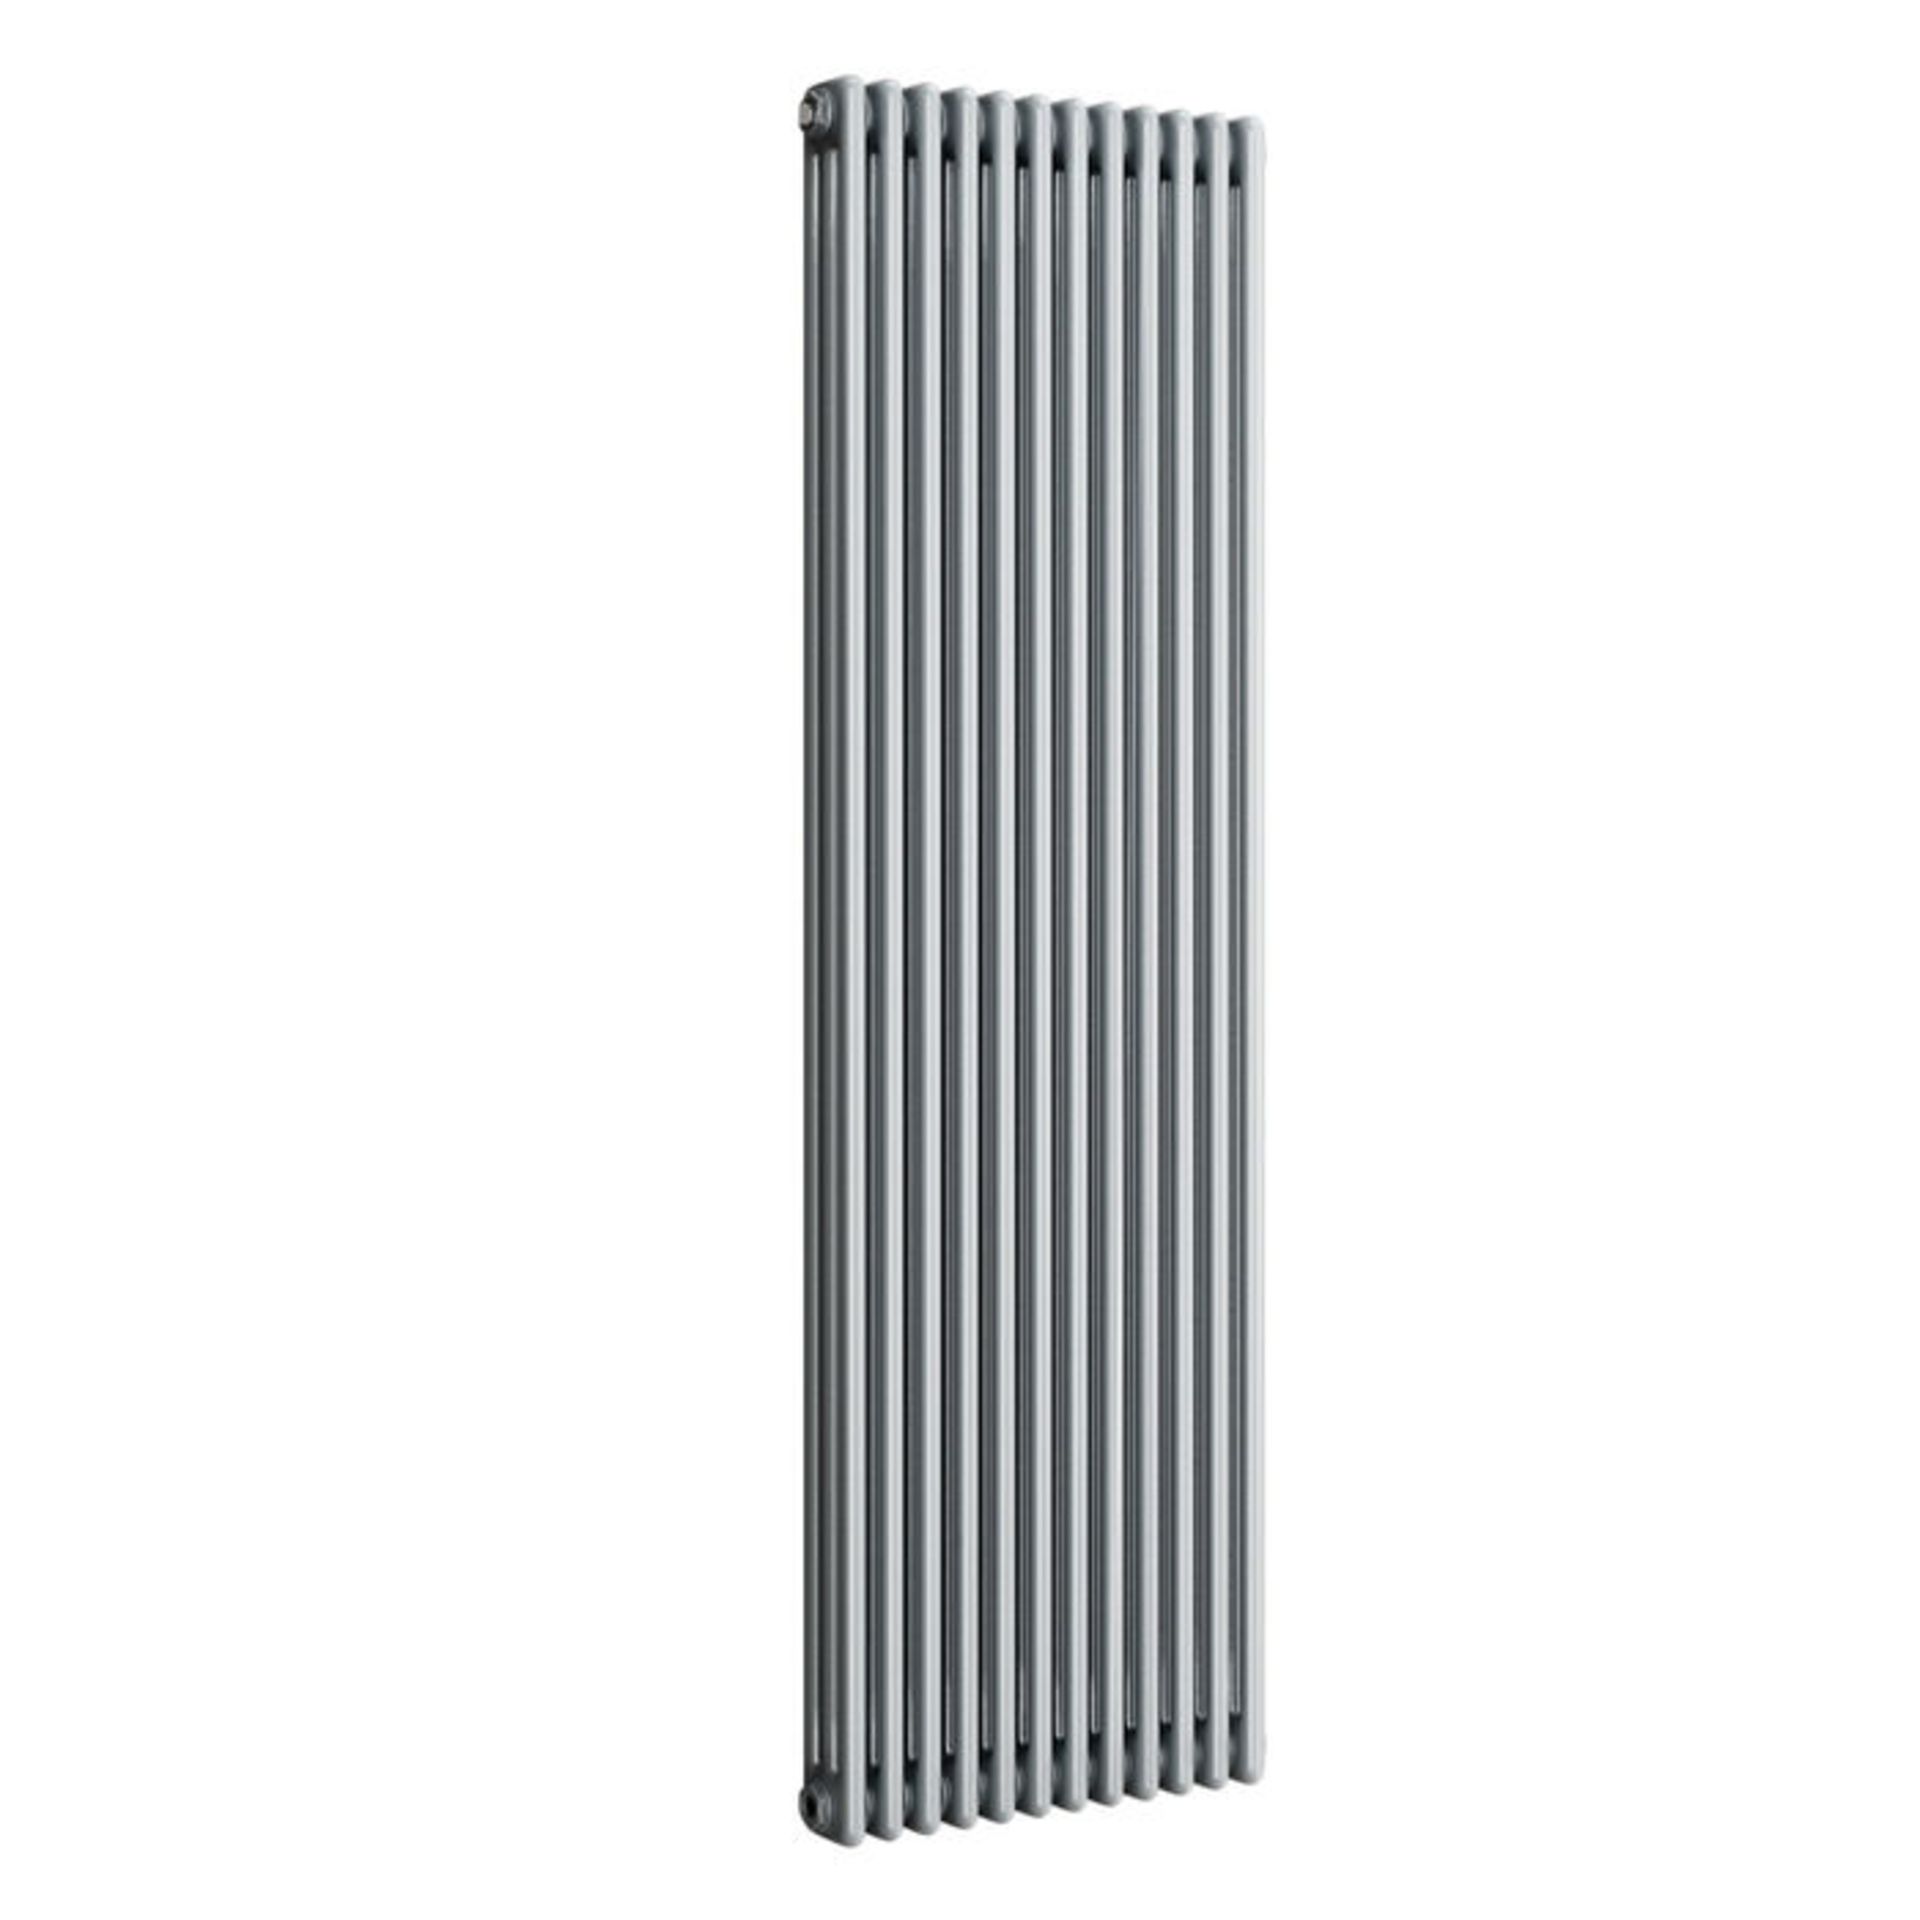 (AL267) 1800x554mm Earl Grey Triple Panel Vertical ColosseumTraditional Radiator. RRP £519.99. - Image 3 of 3